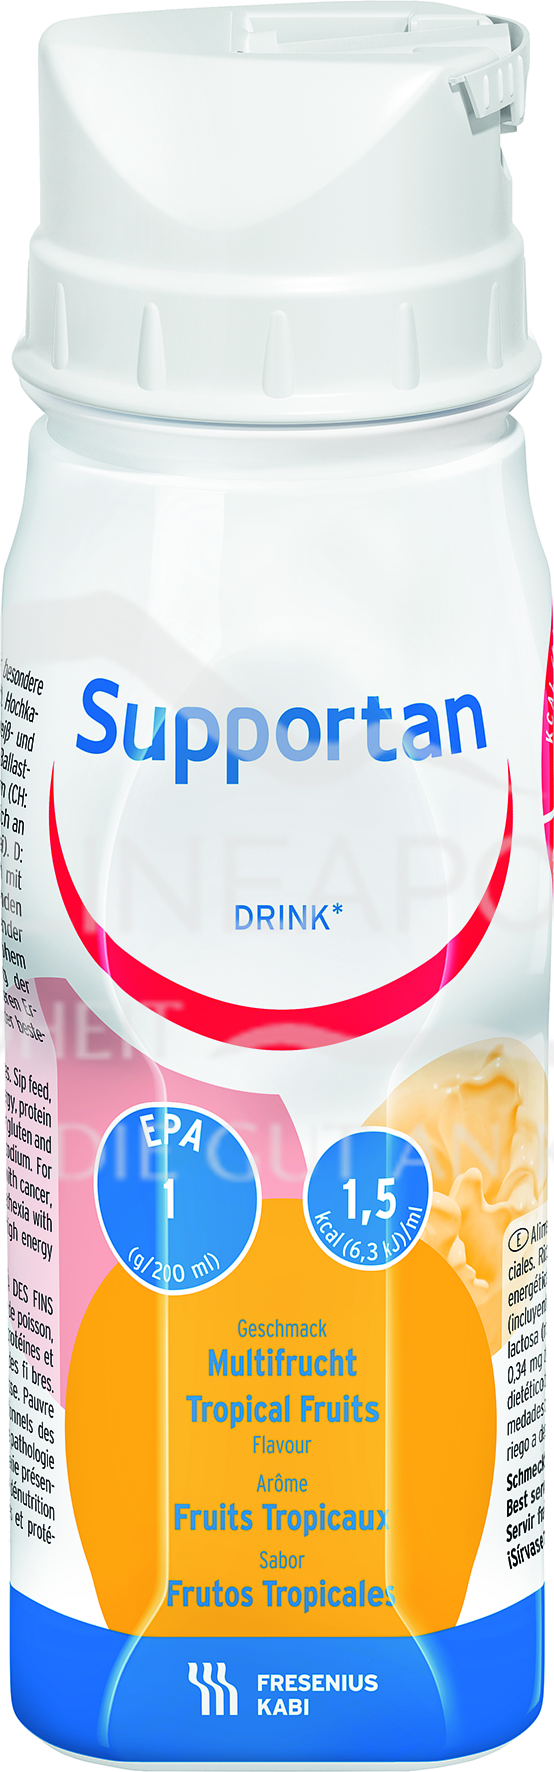 Supportan® DRINK Multifrucht